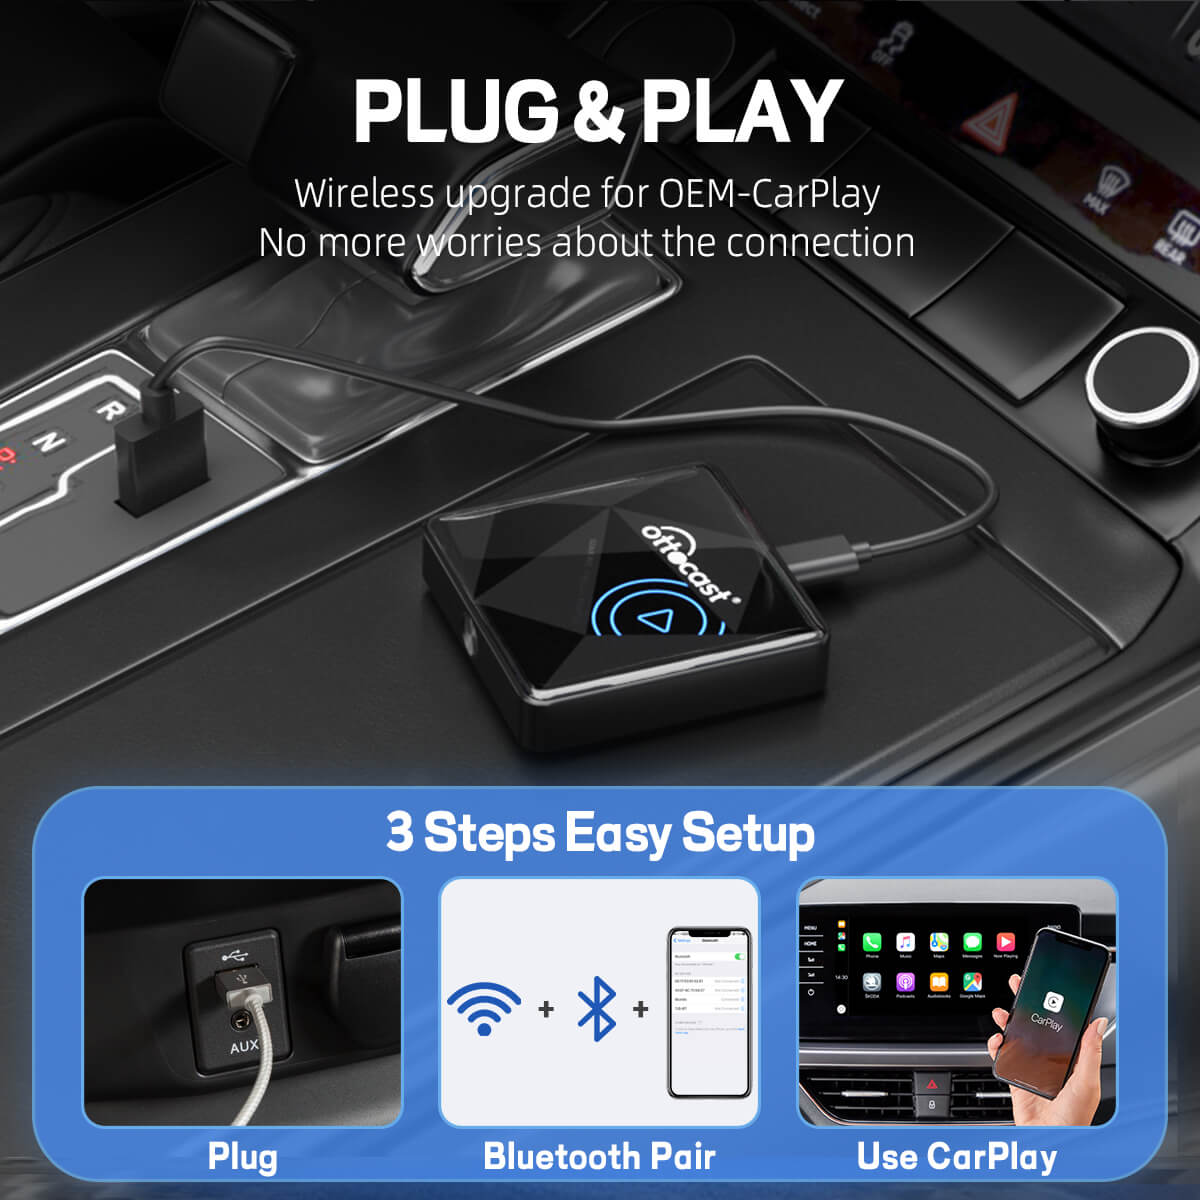 U2-AIR Pro ワイヤレス CarPlay アダプター